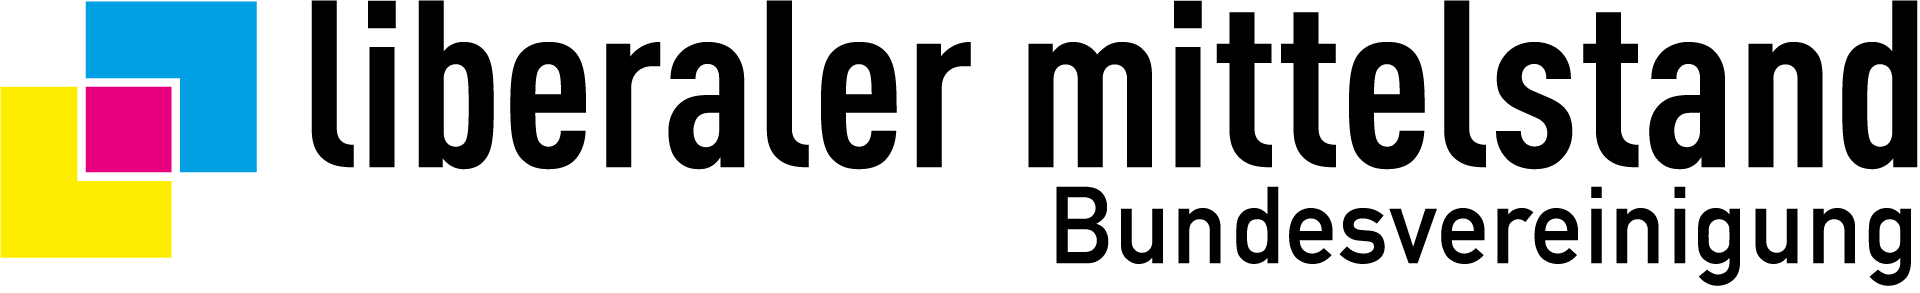 Liberaler Mittelstand Bundesverband Logo